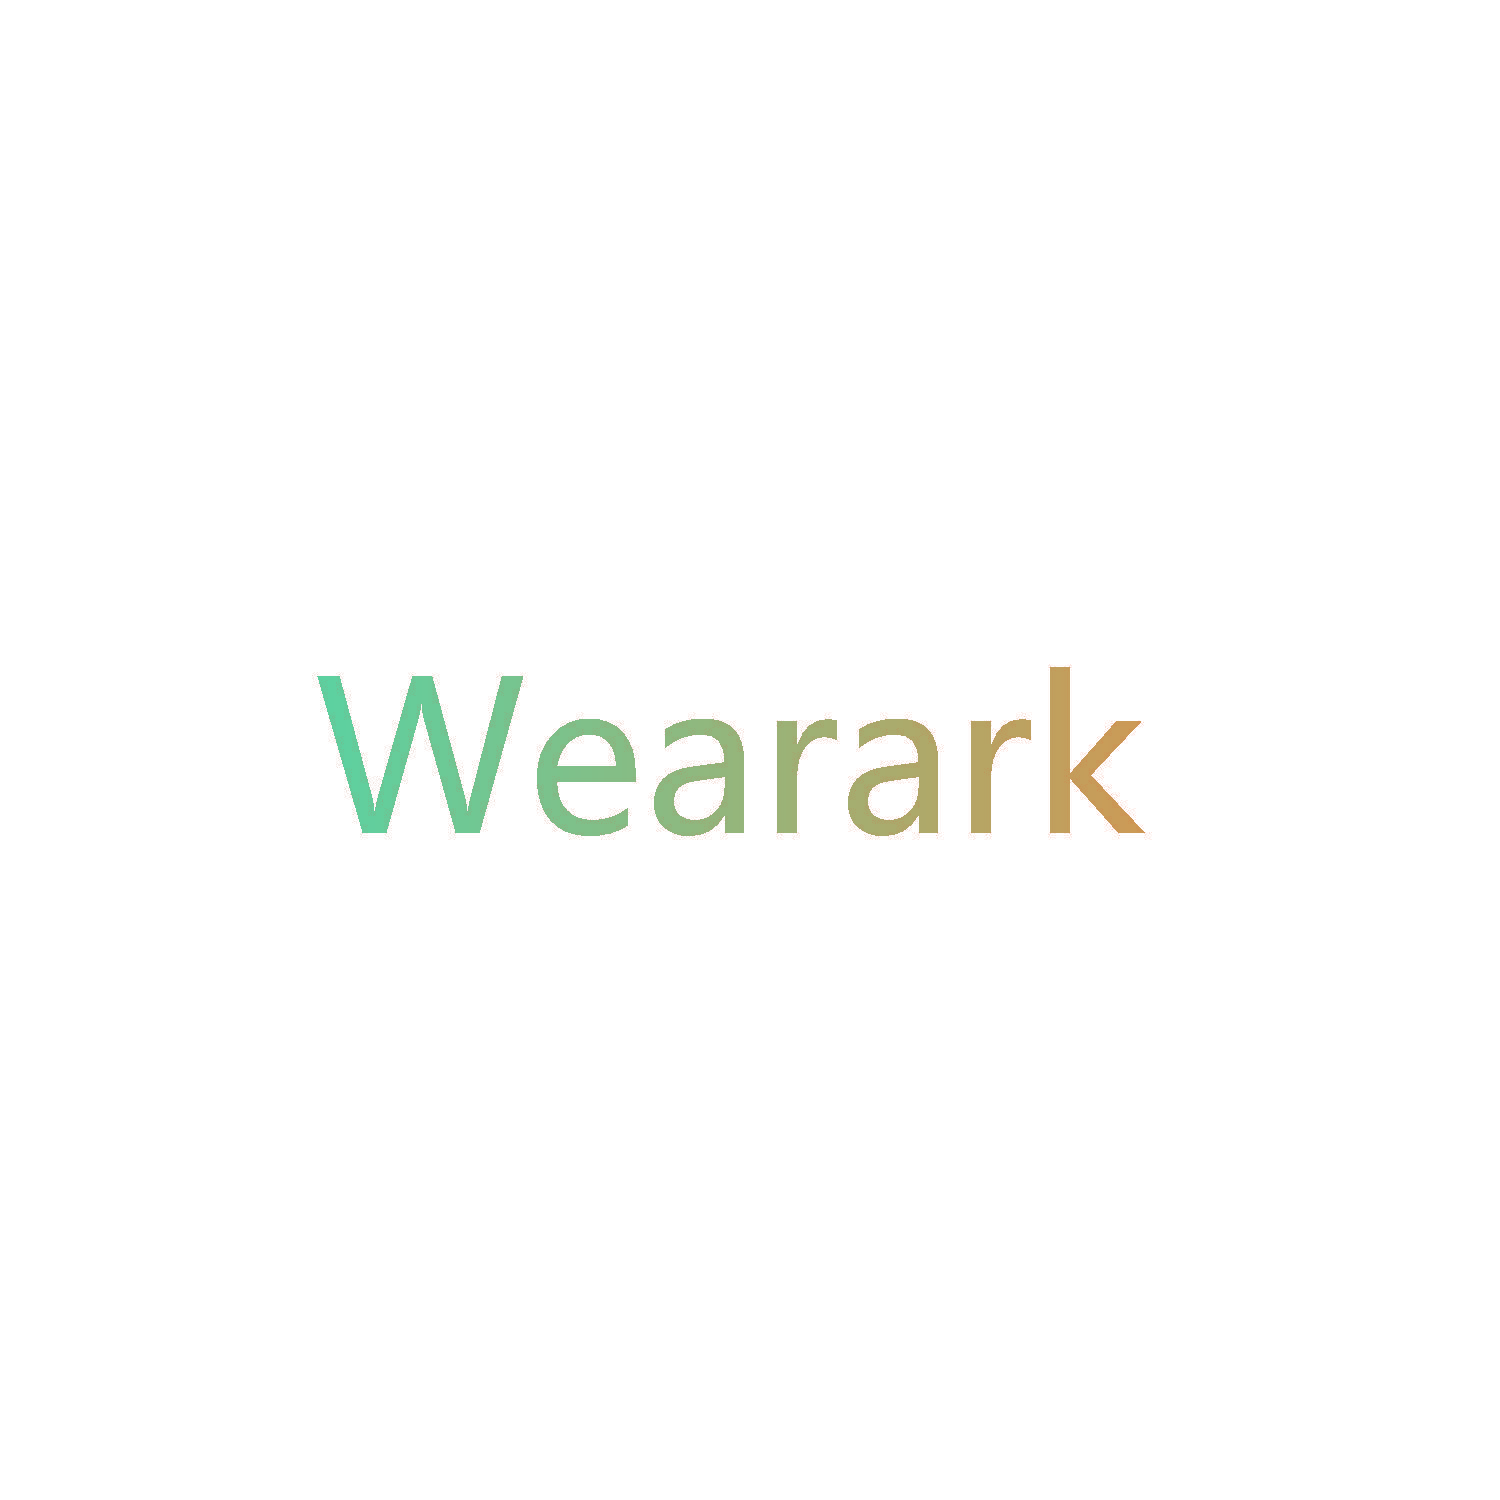 Wearark